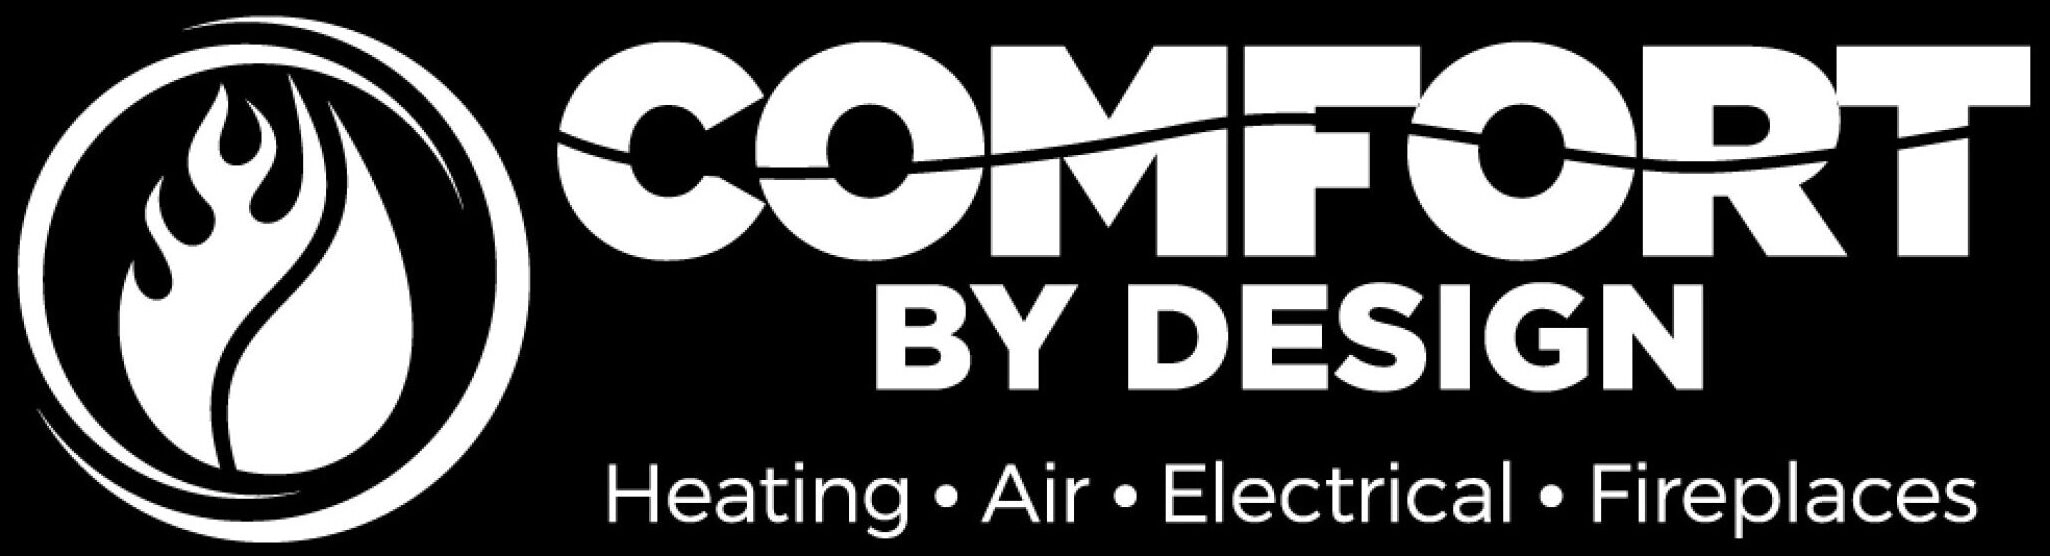 Comfort By Design Logo